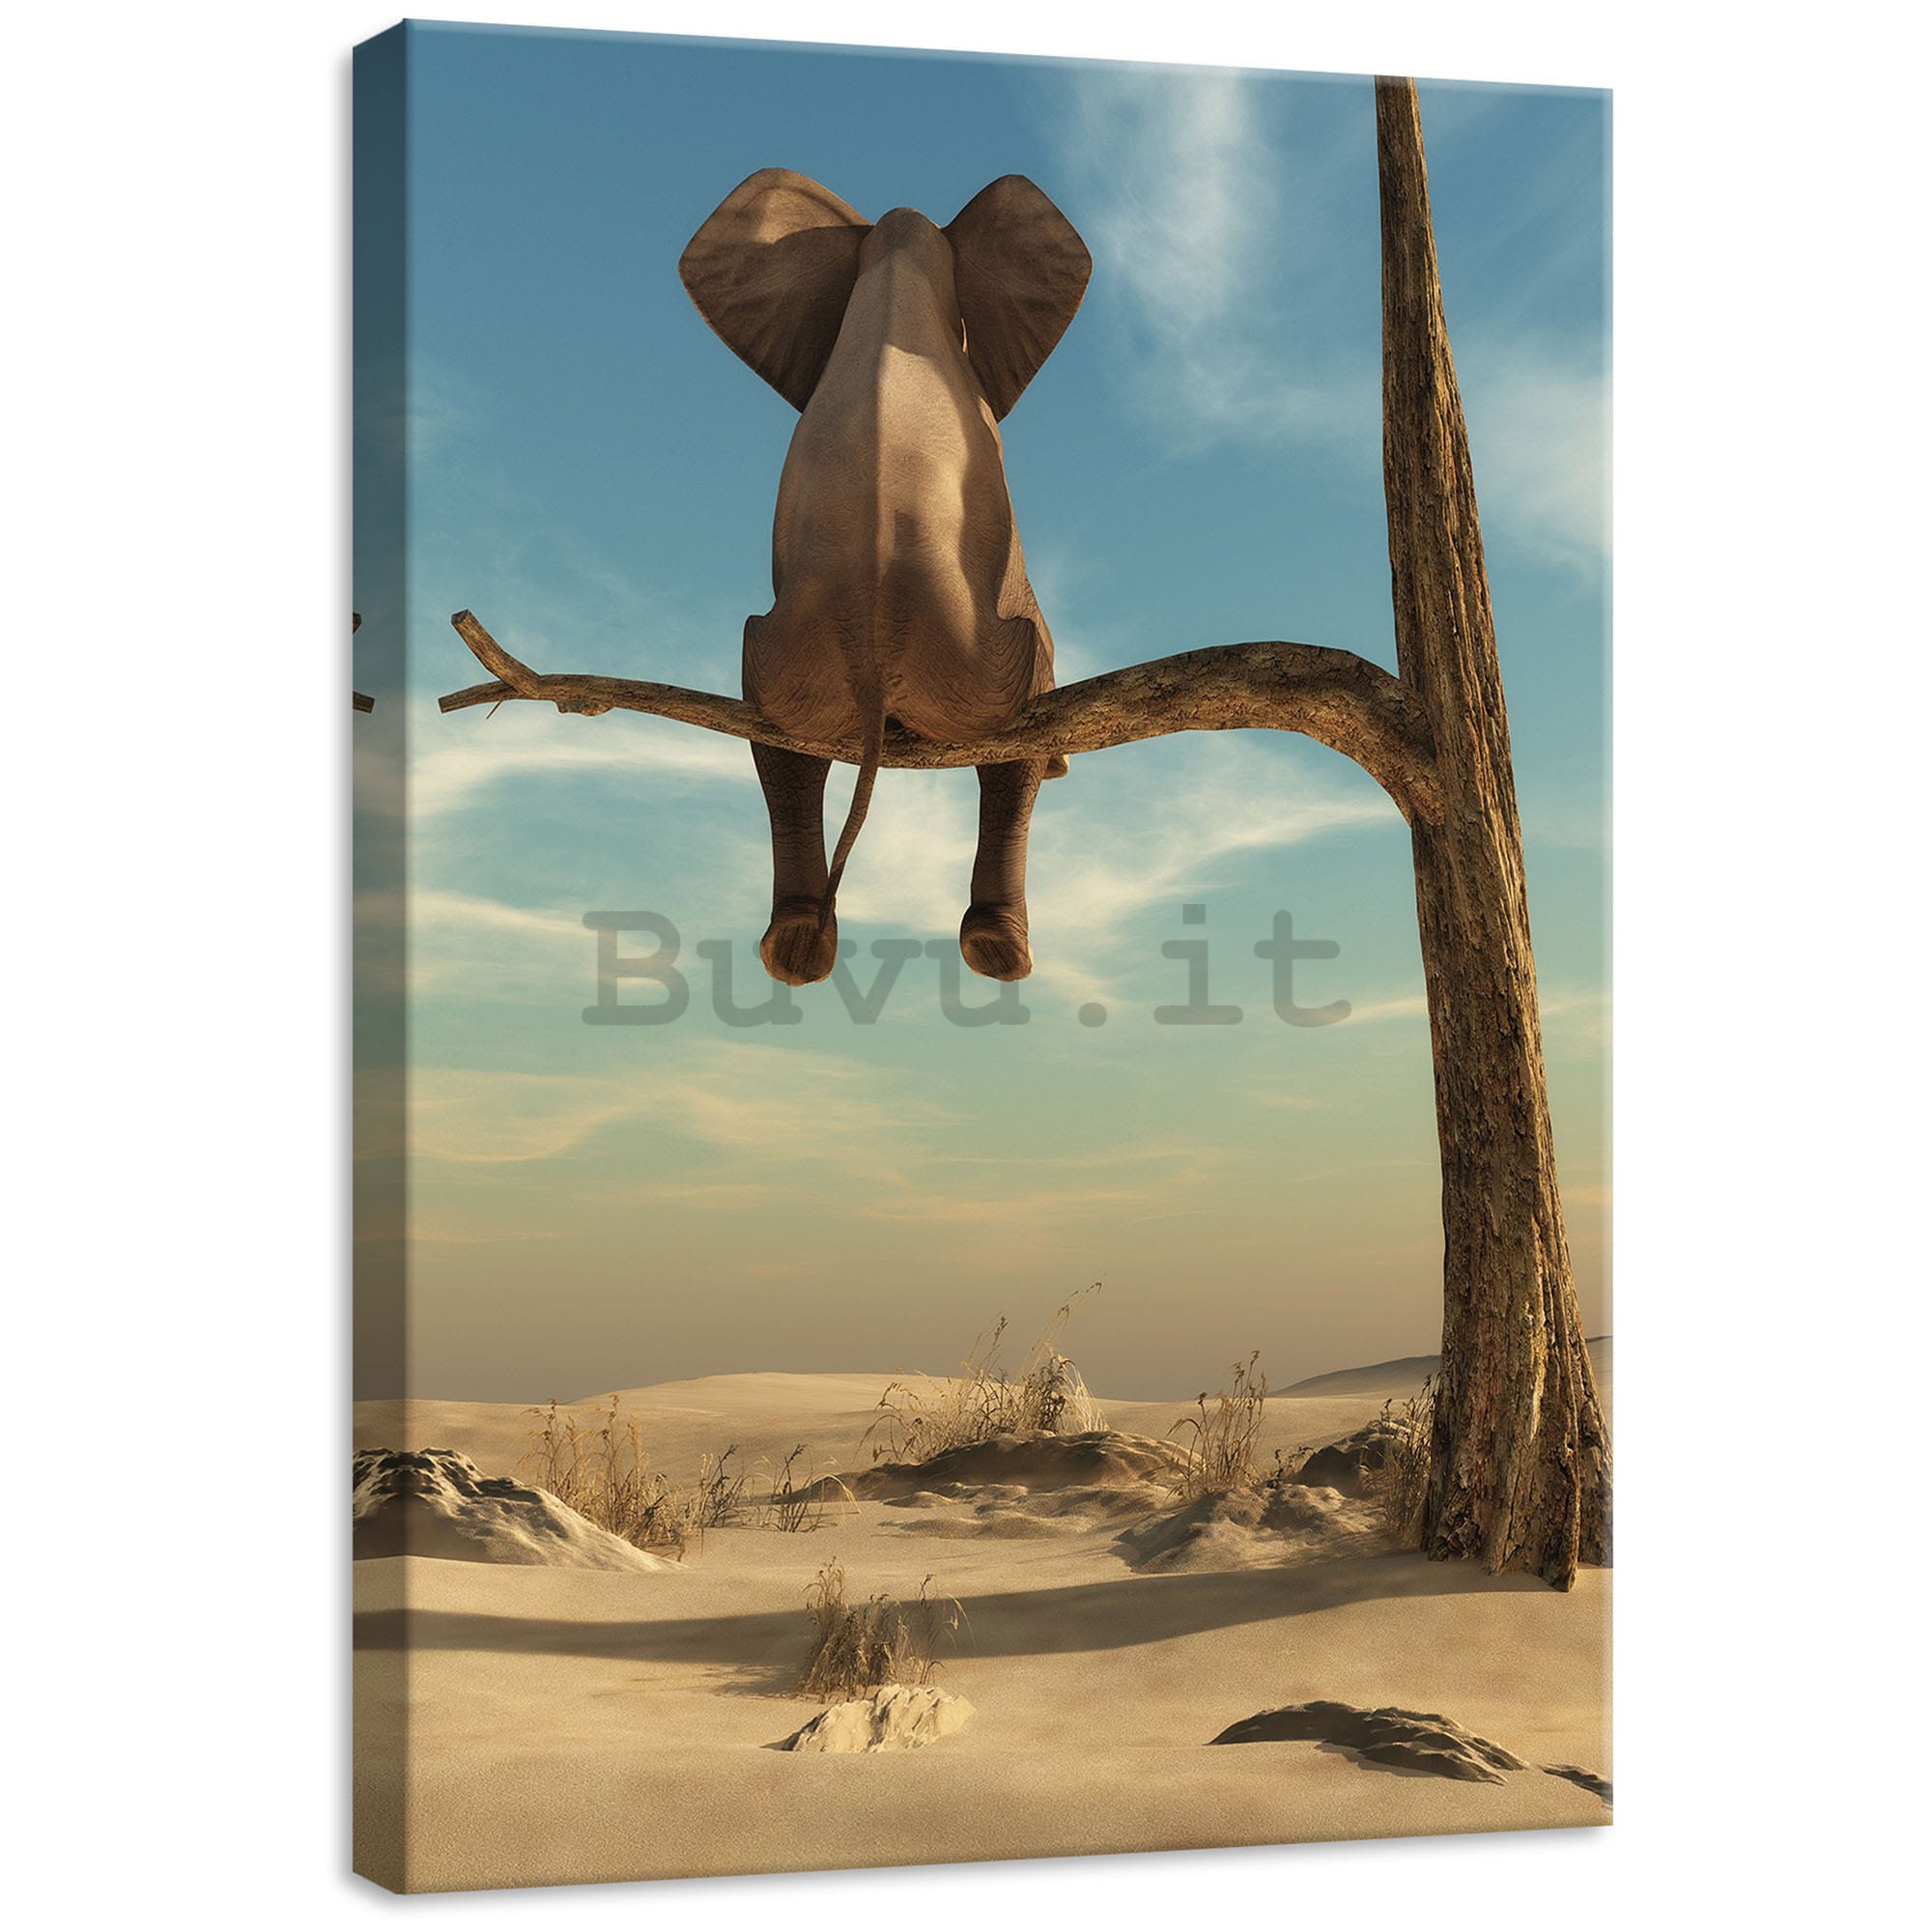 Quadro su tela: Elefante sull'albero - 50x70 cm